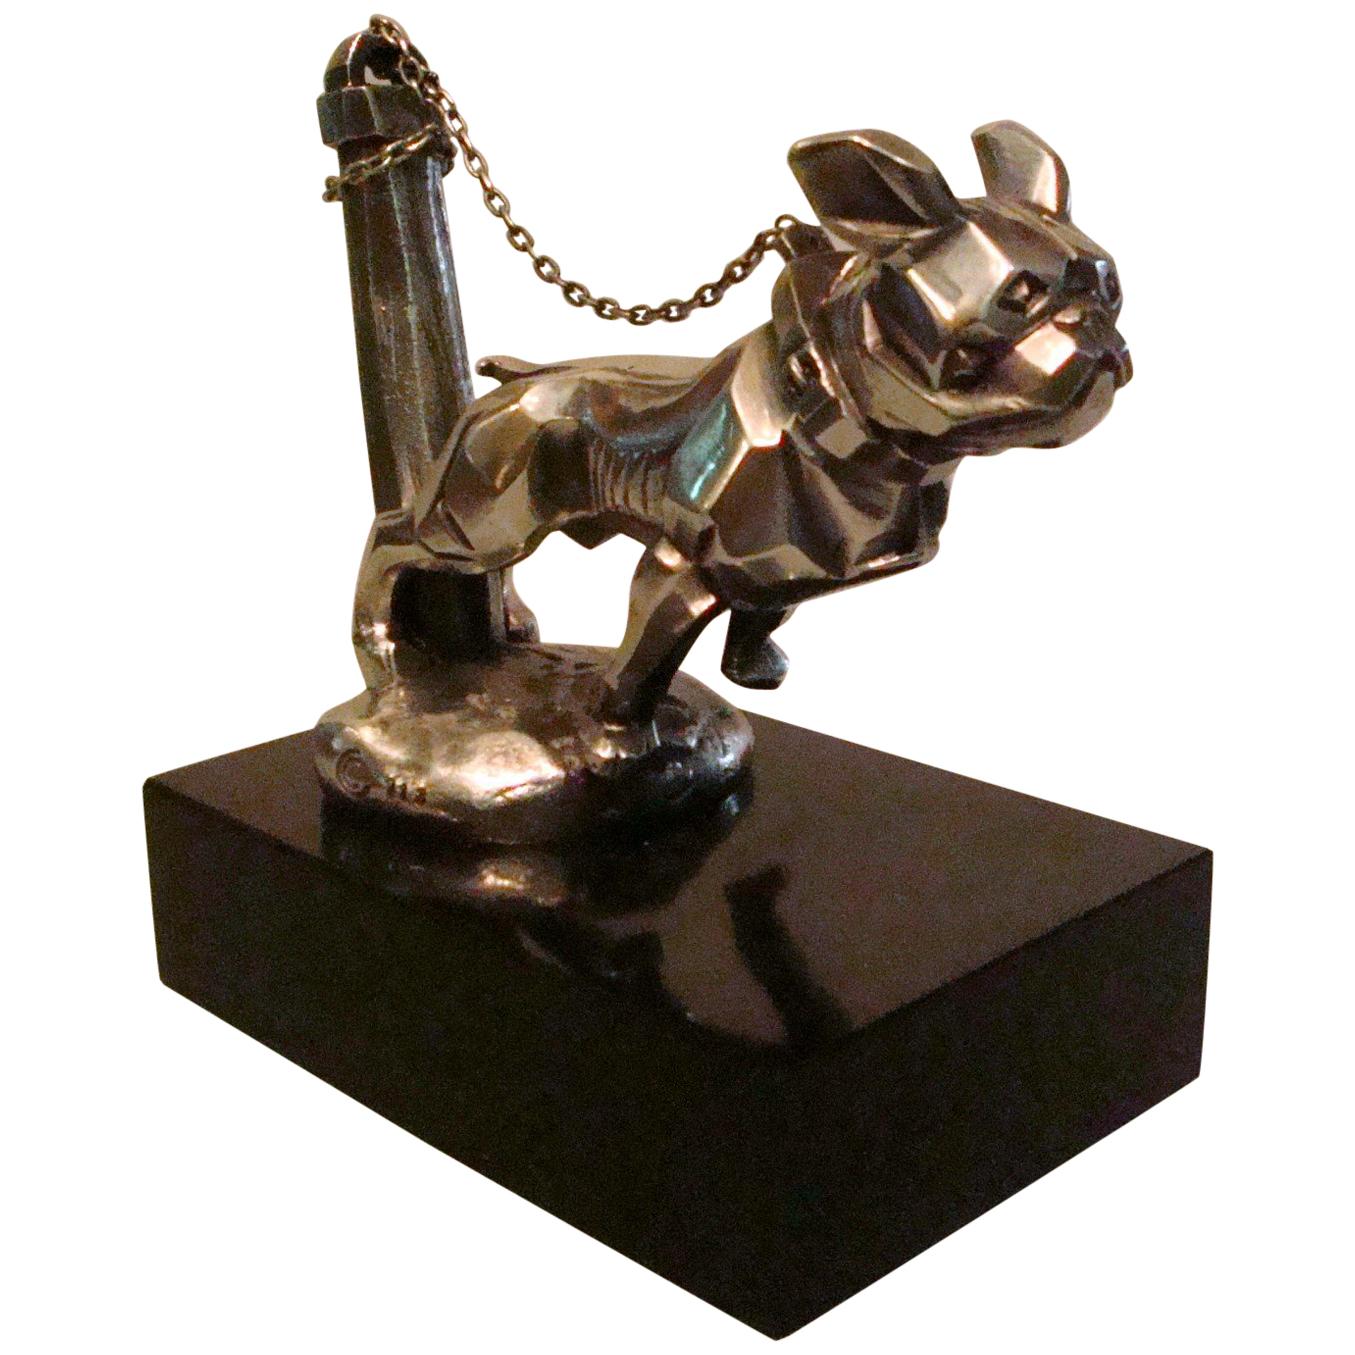 Art Deco Car Mascot, Chained French Bulldog, Hood Ornament, France 1920s